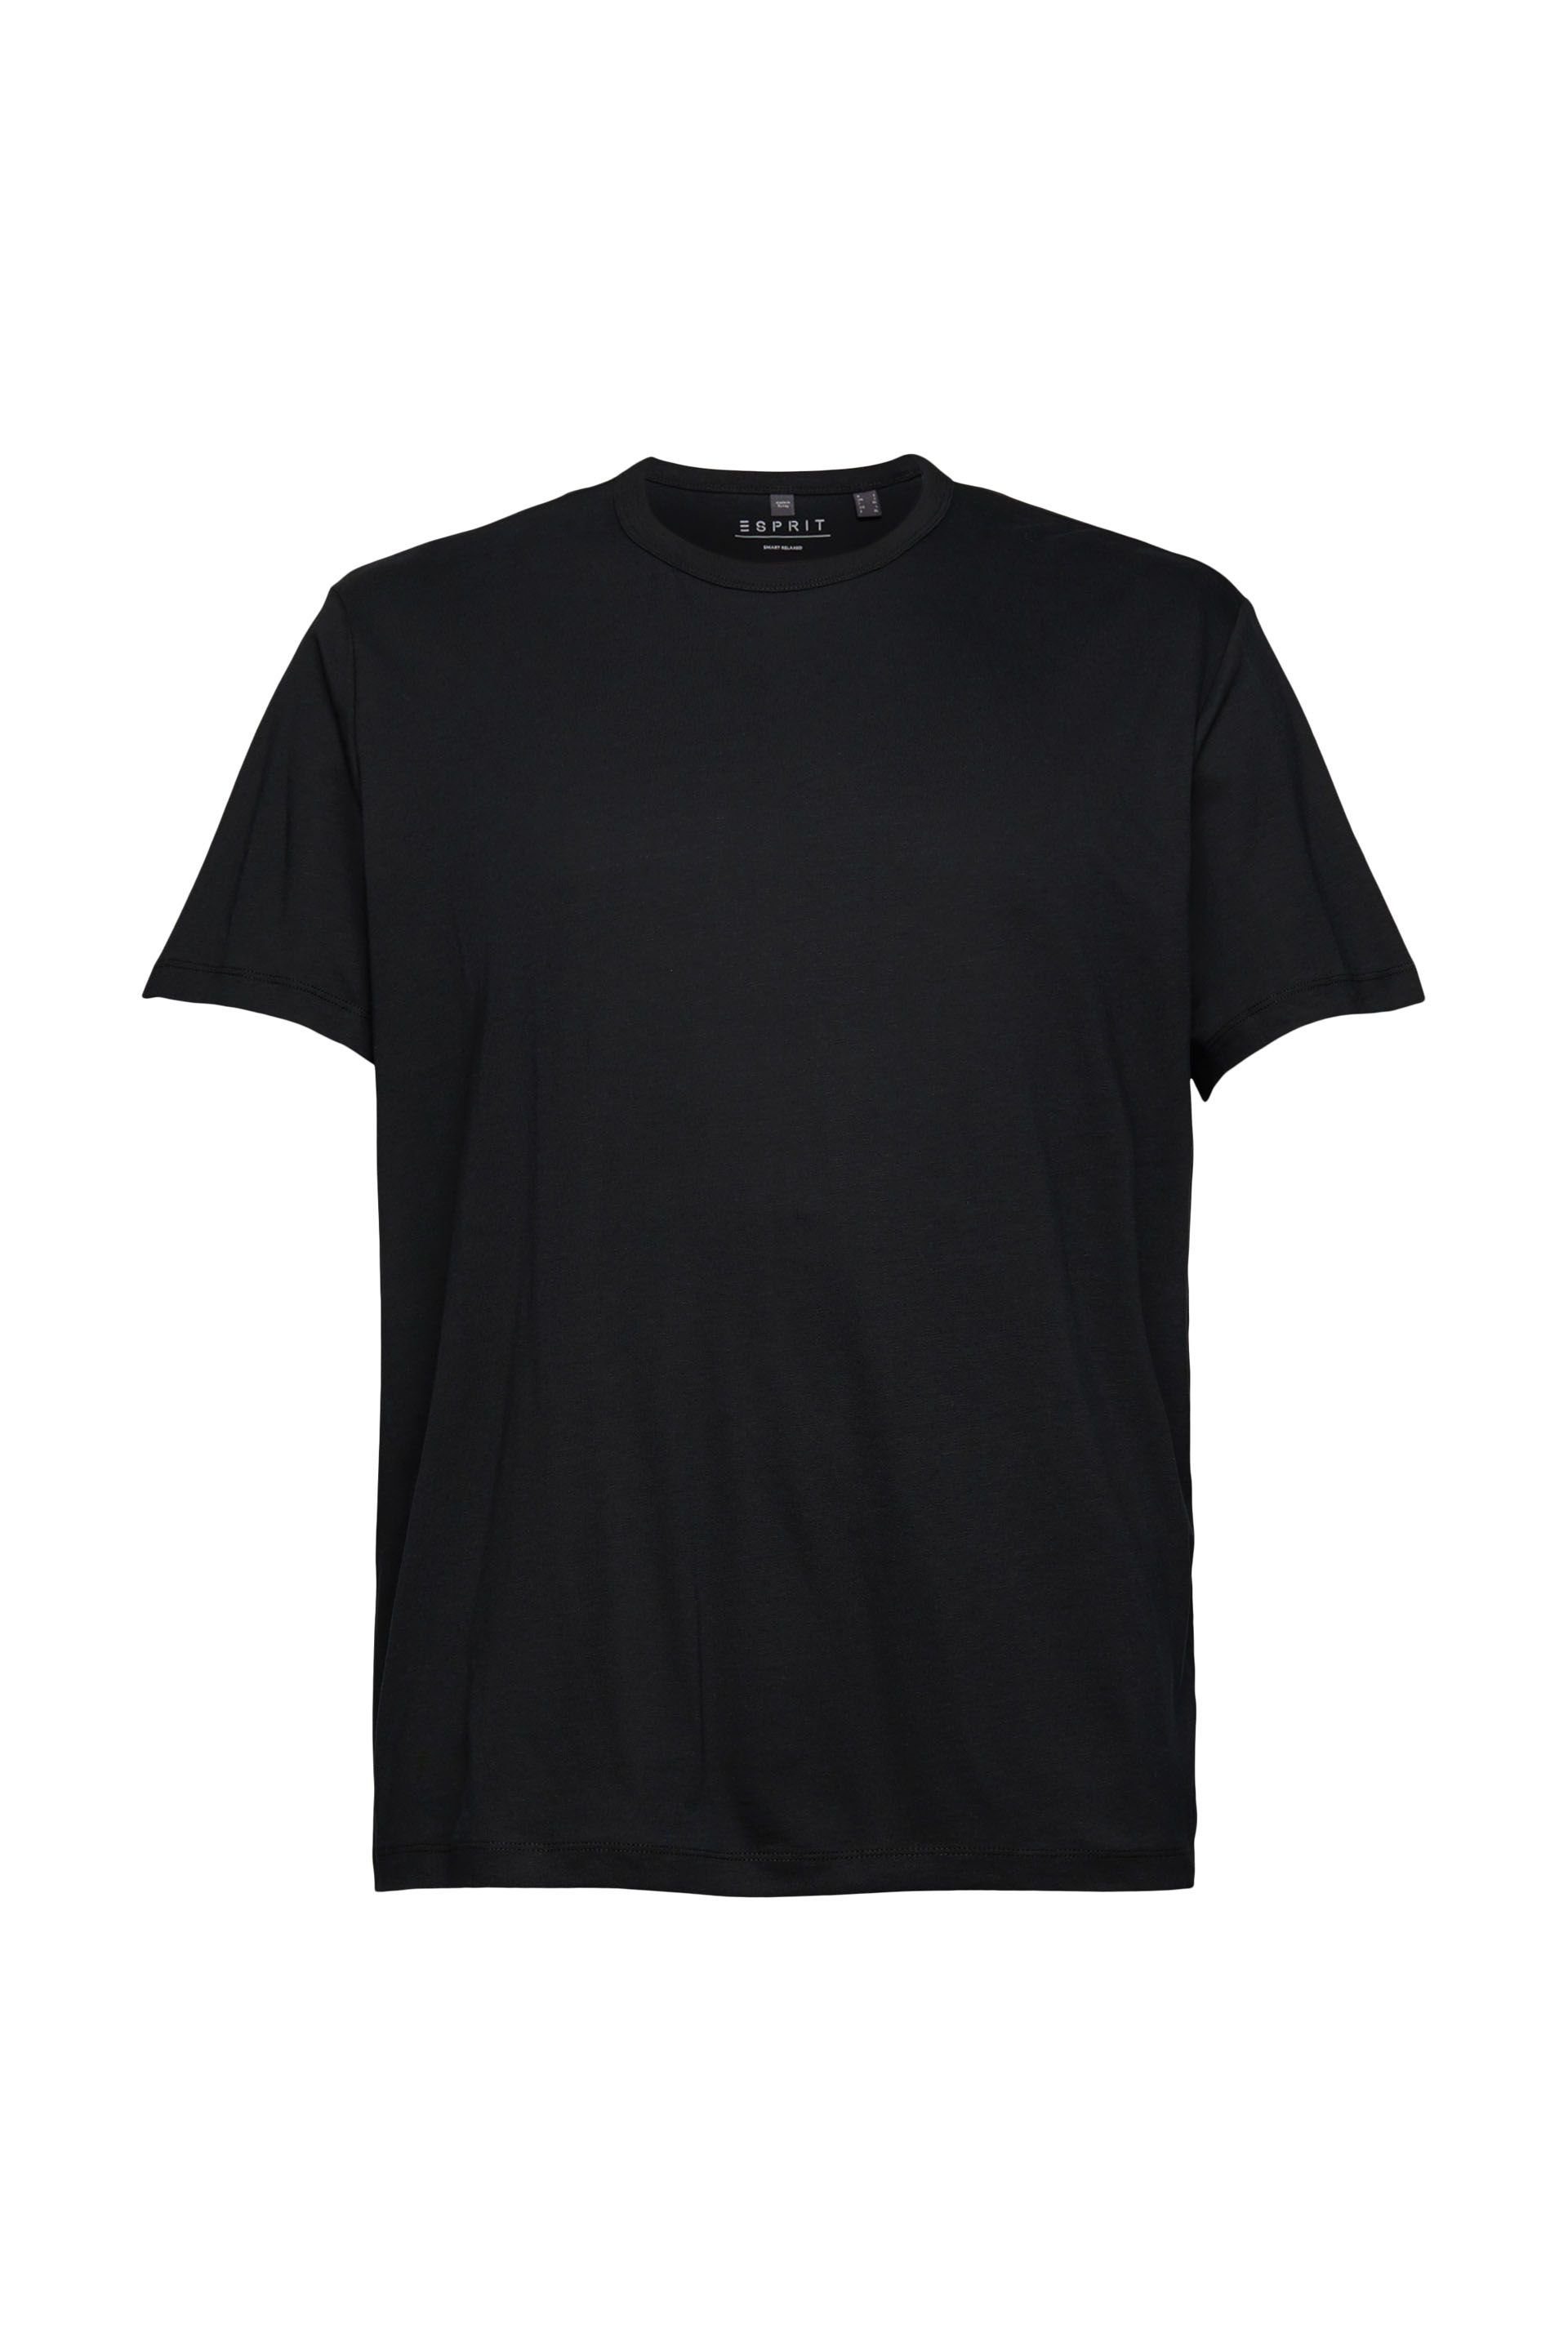 Esprit black T-Shirt